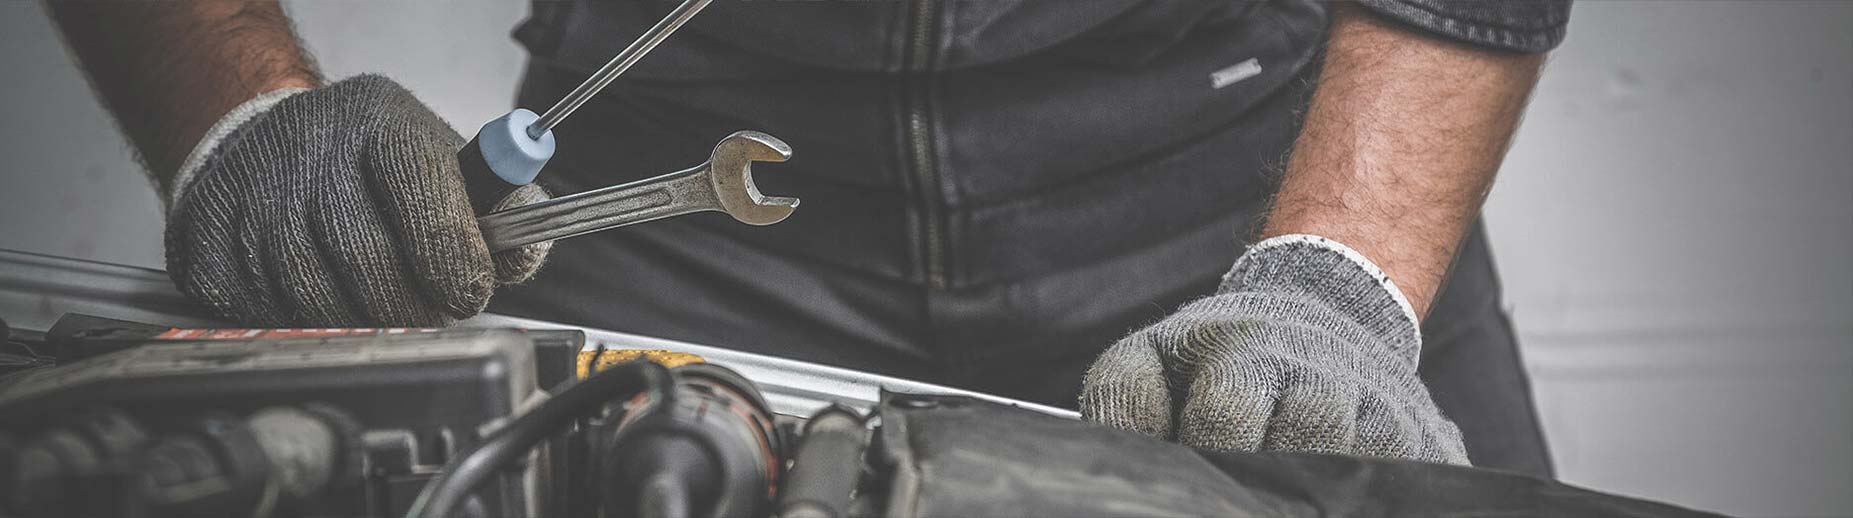 Plattsville Auto Repair, Truck Accessories and Truck Lift Kits